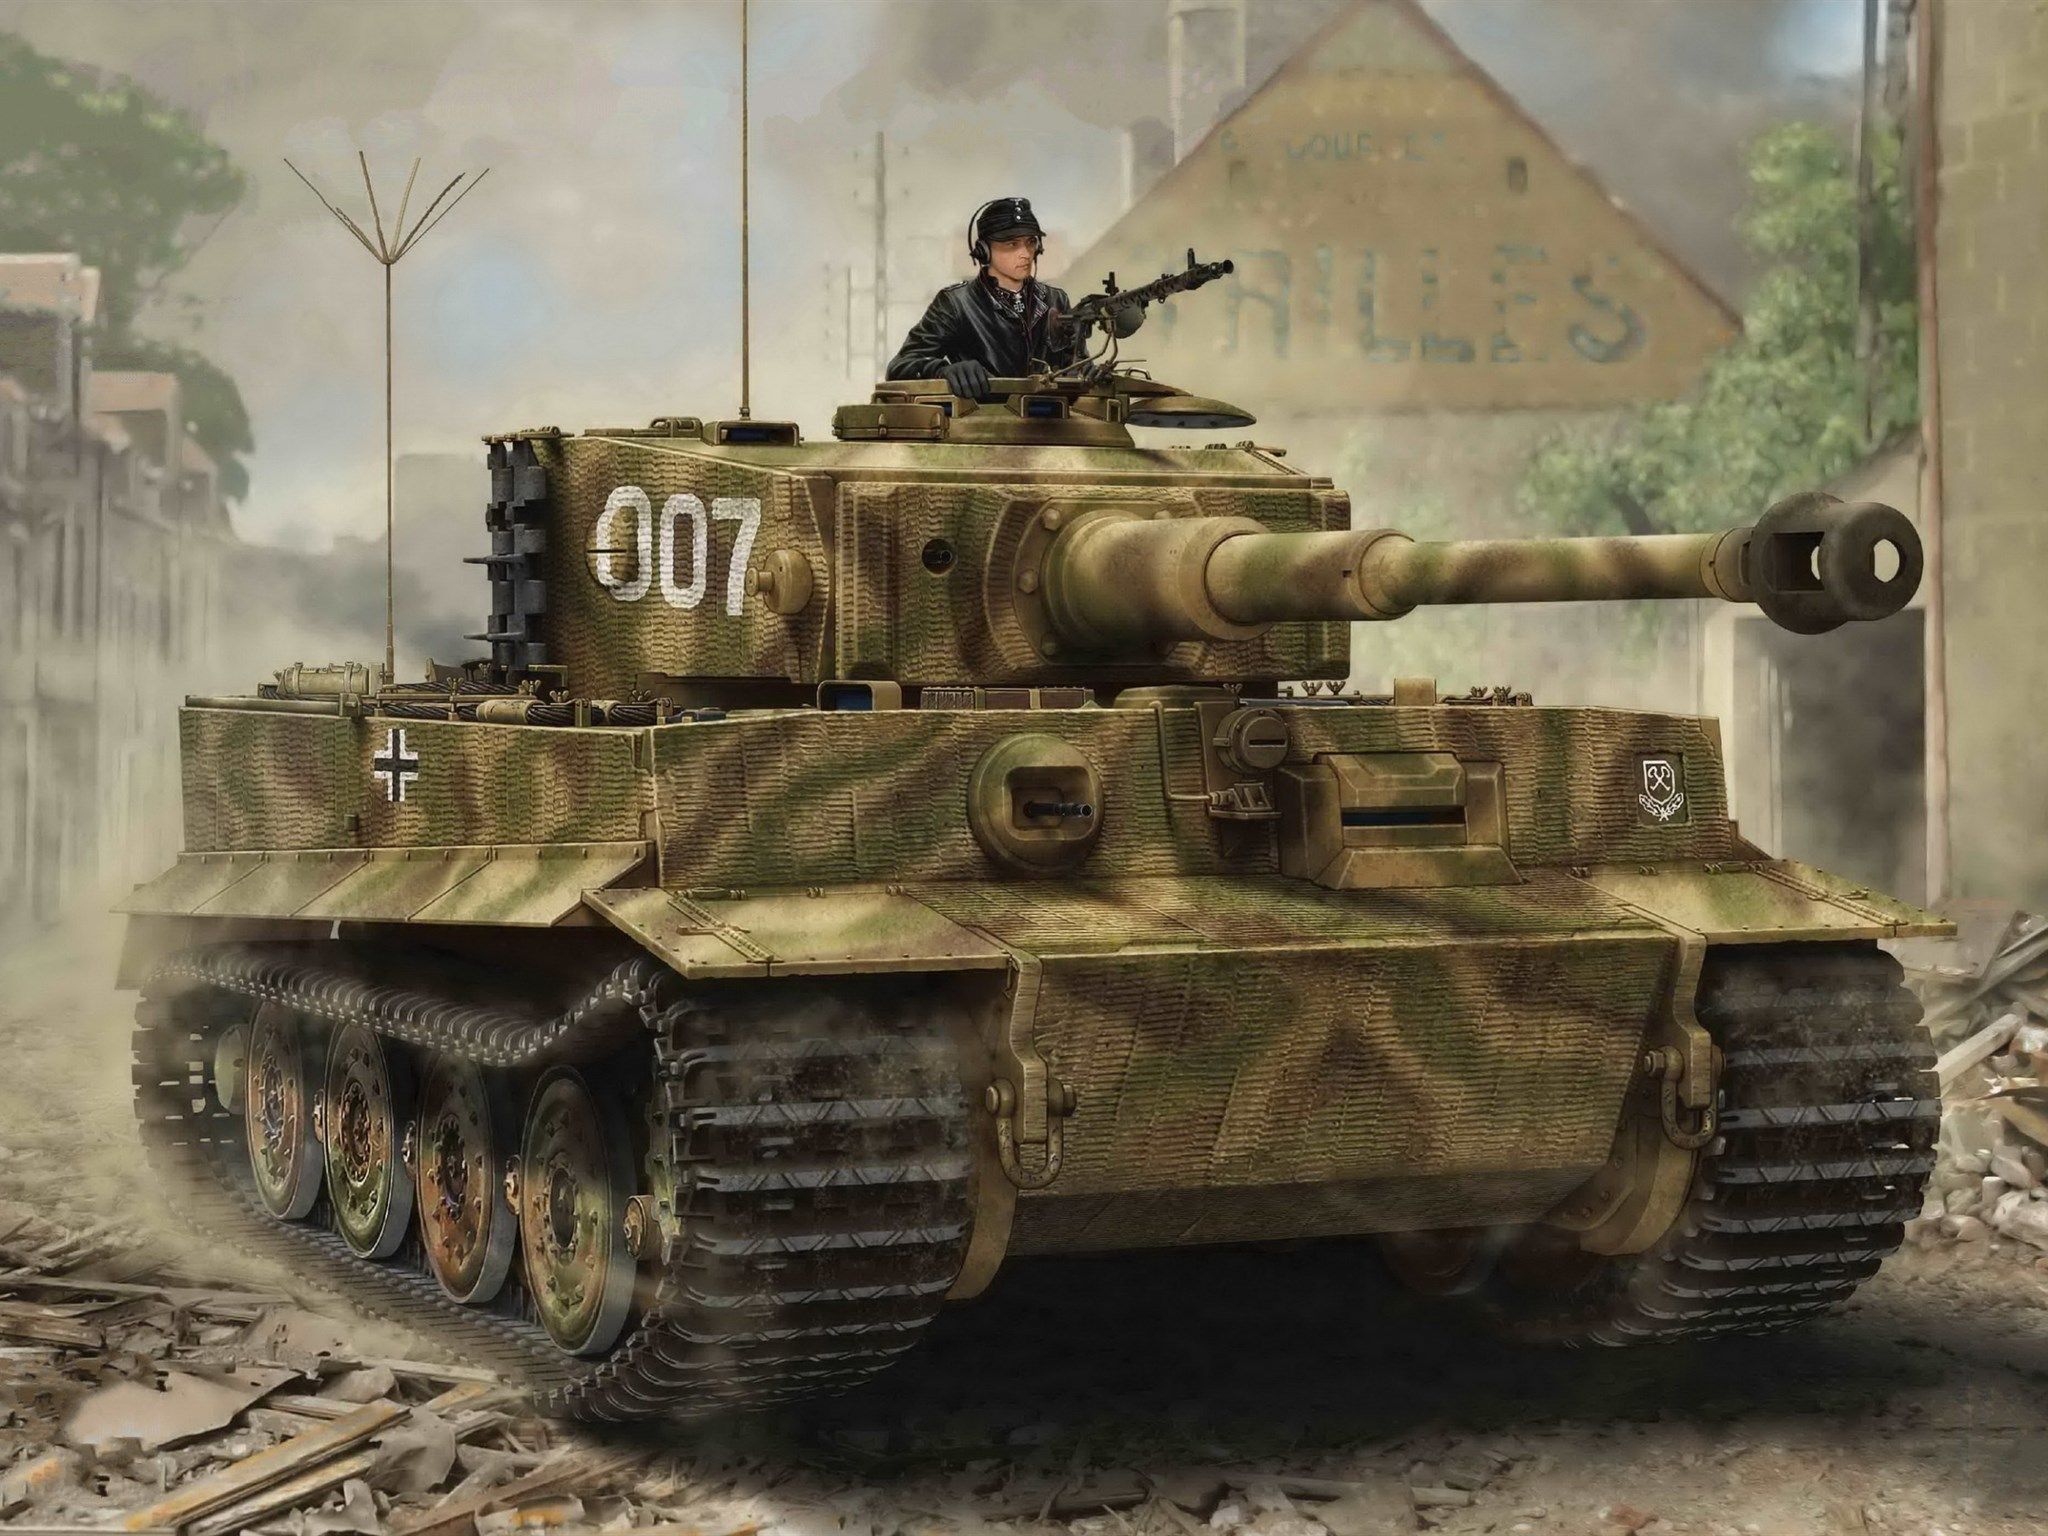 Tiger tanks